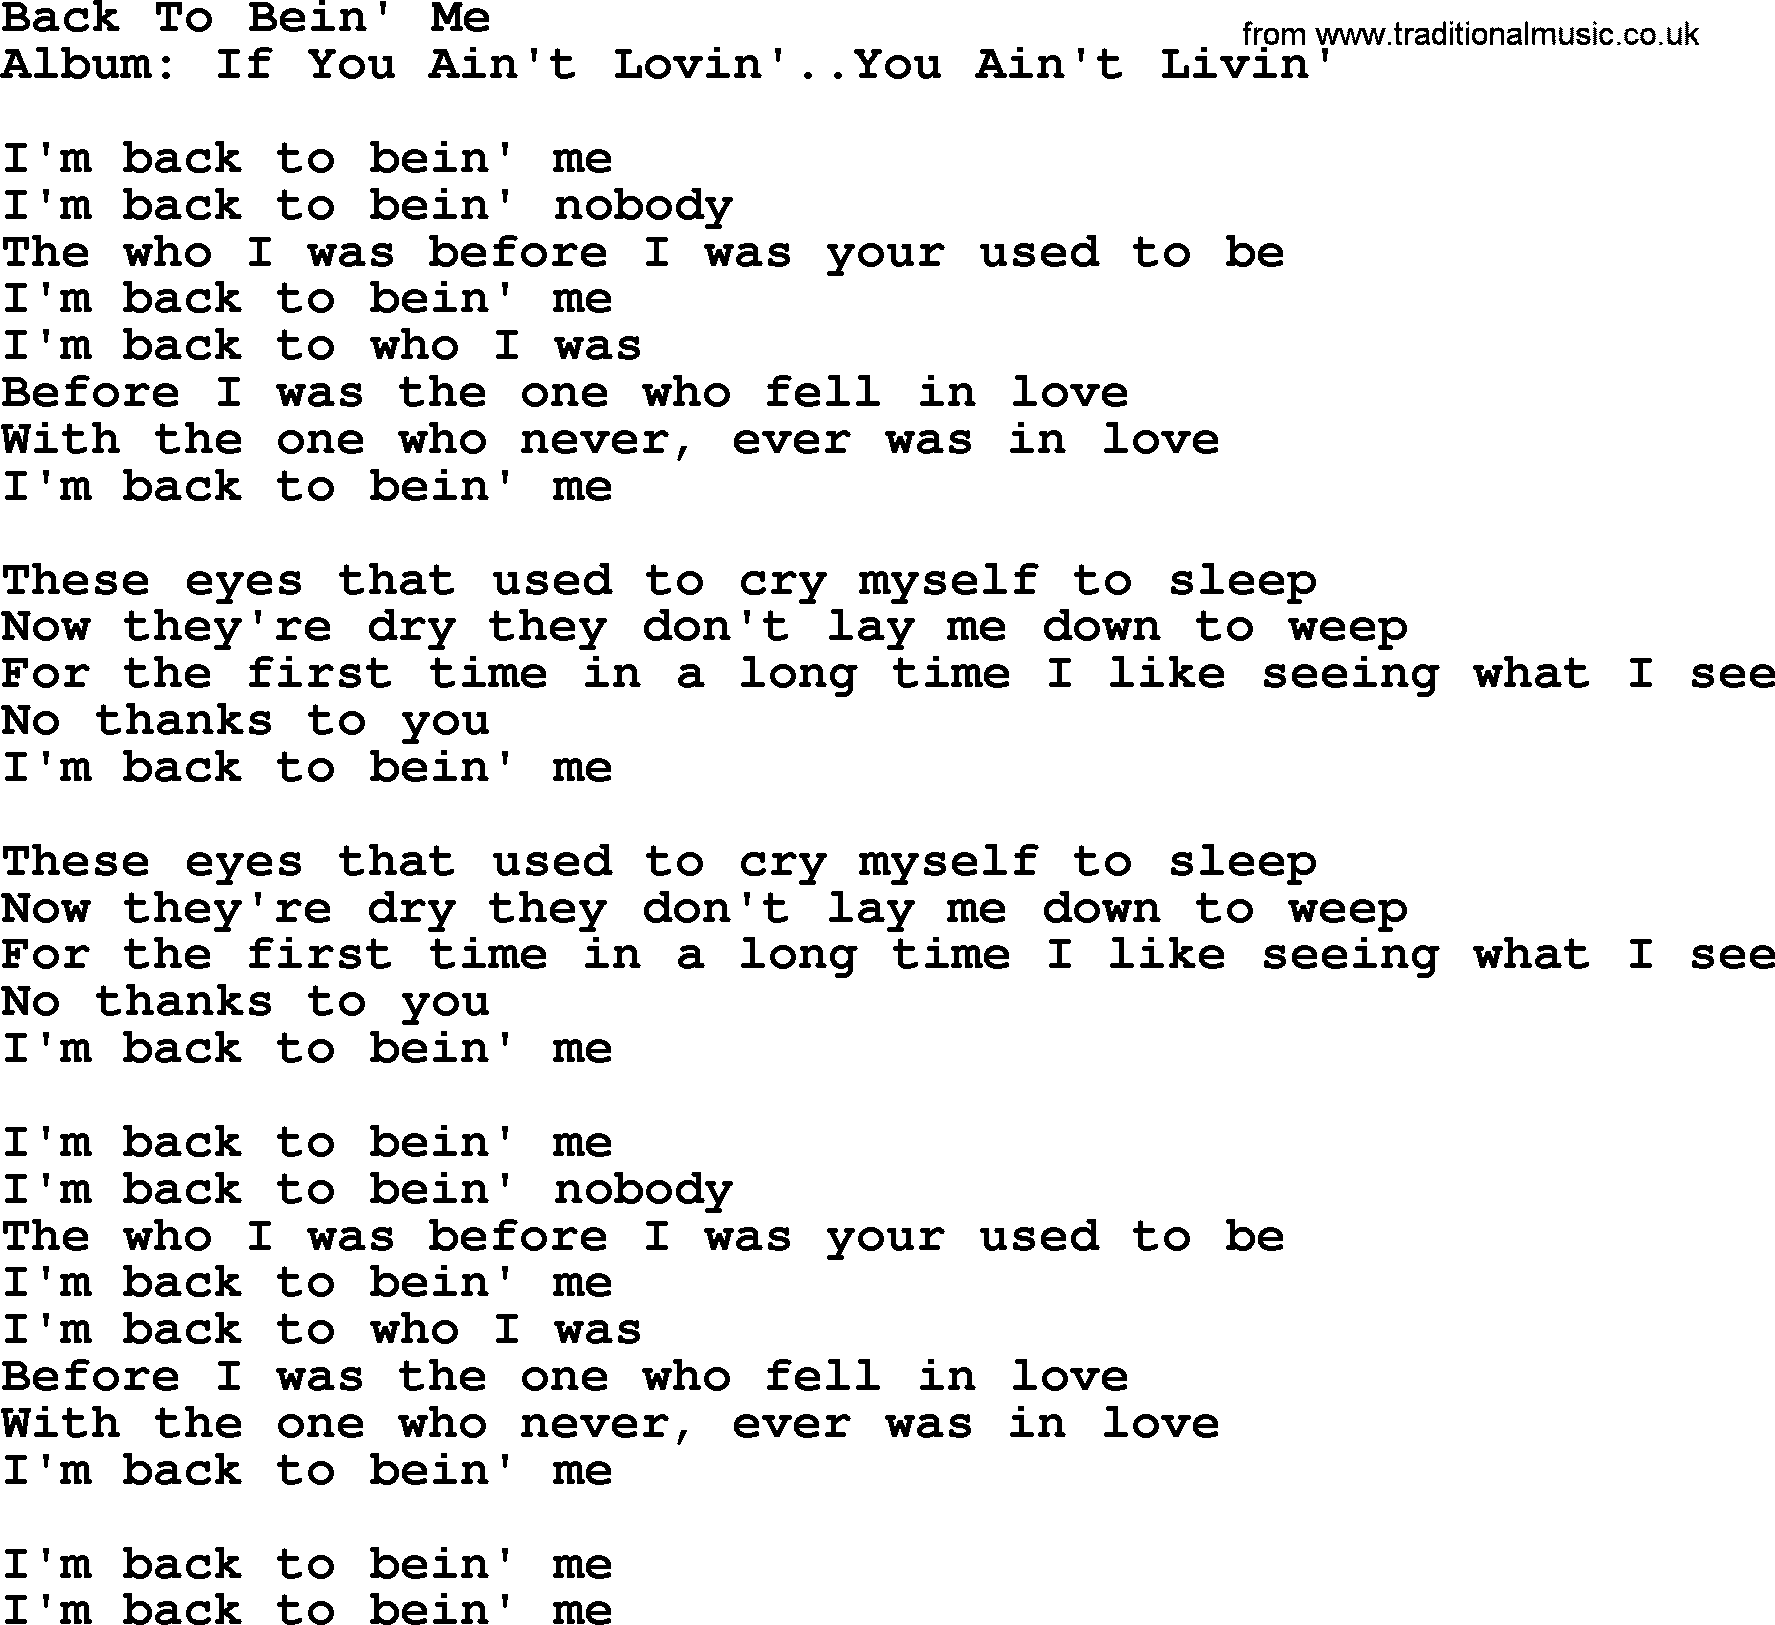 George Strait song: Back To Bein' Me, lyrics